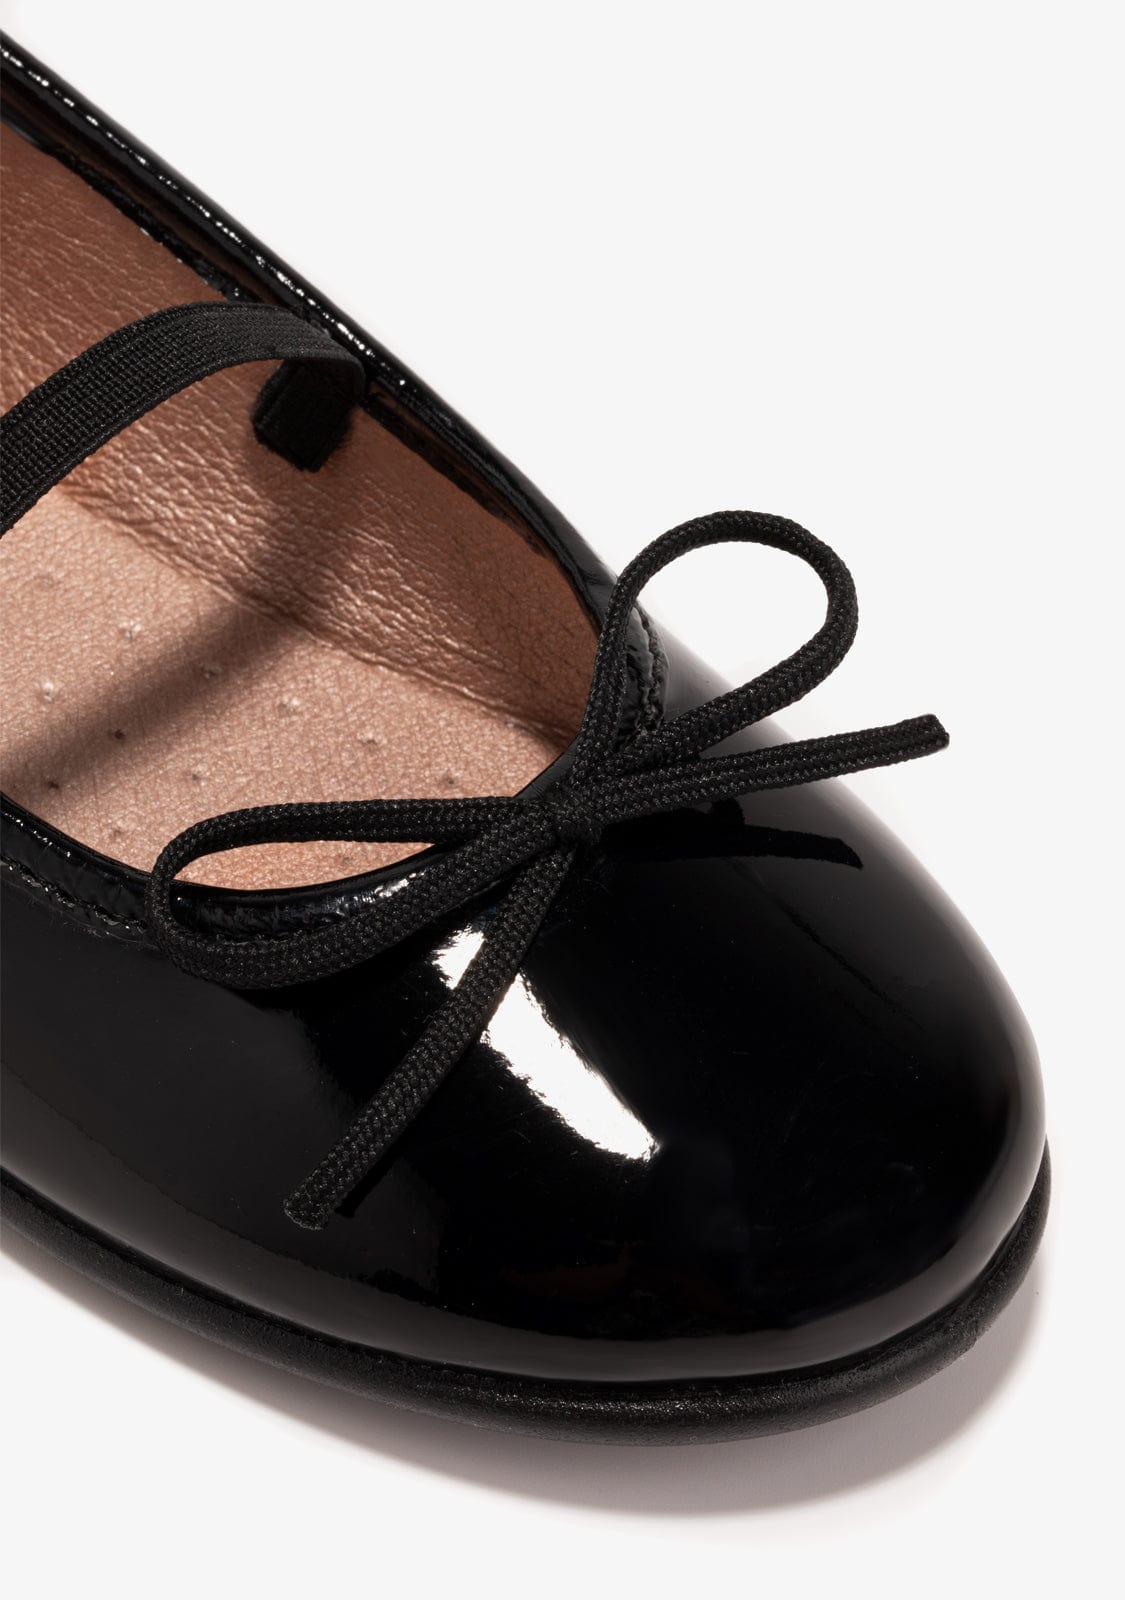 B&W JUNIOR Shoes Girl's Black Ballerinas Patent Leather B&W